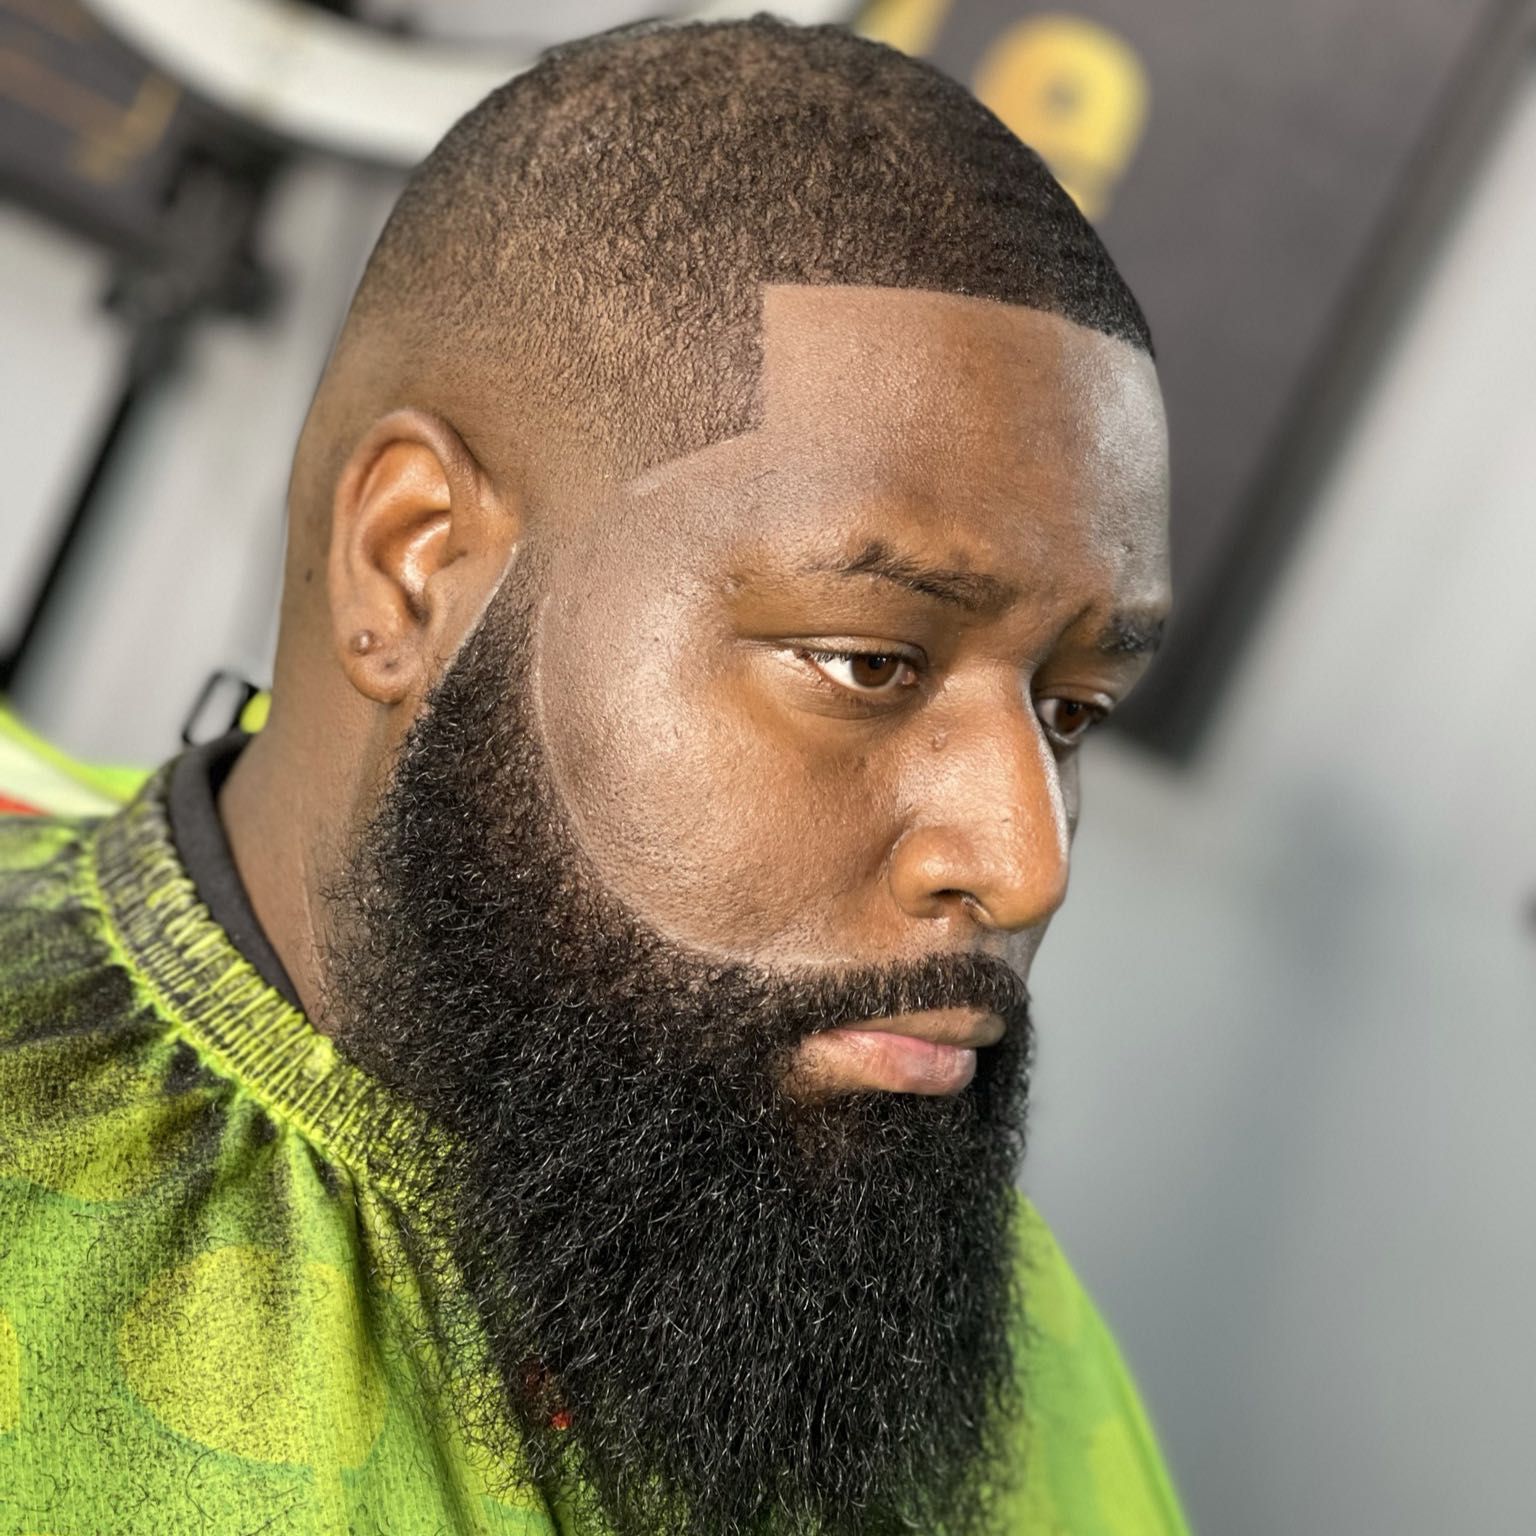 Mens haircut + Beard shaping portfolio